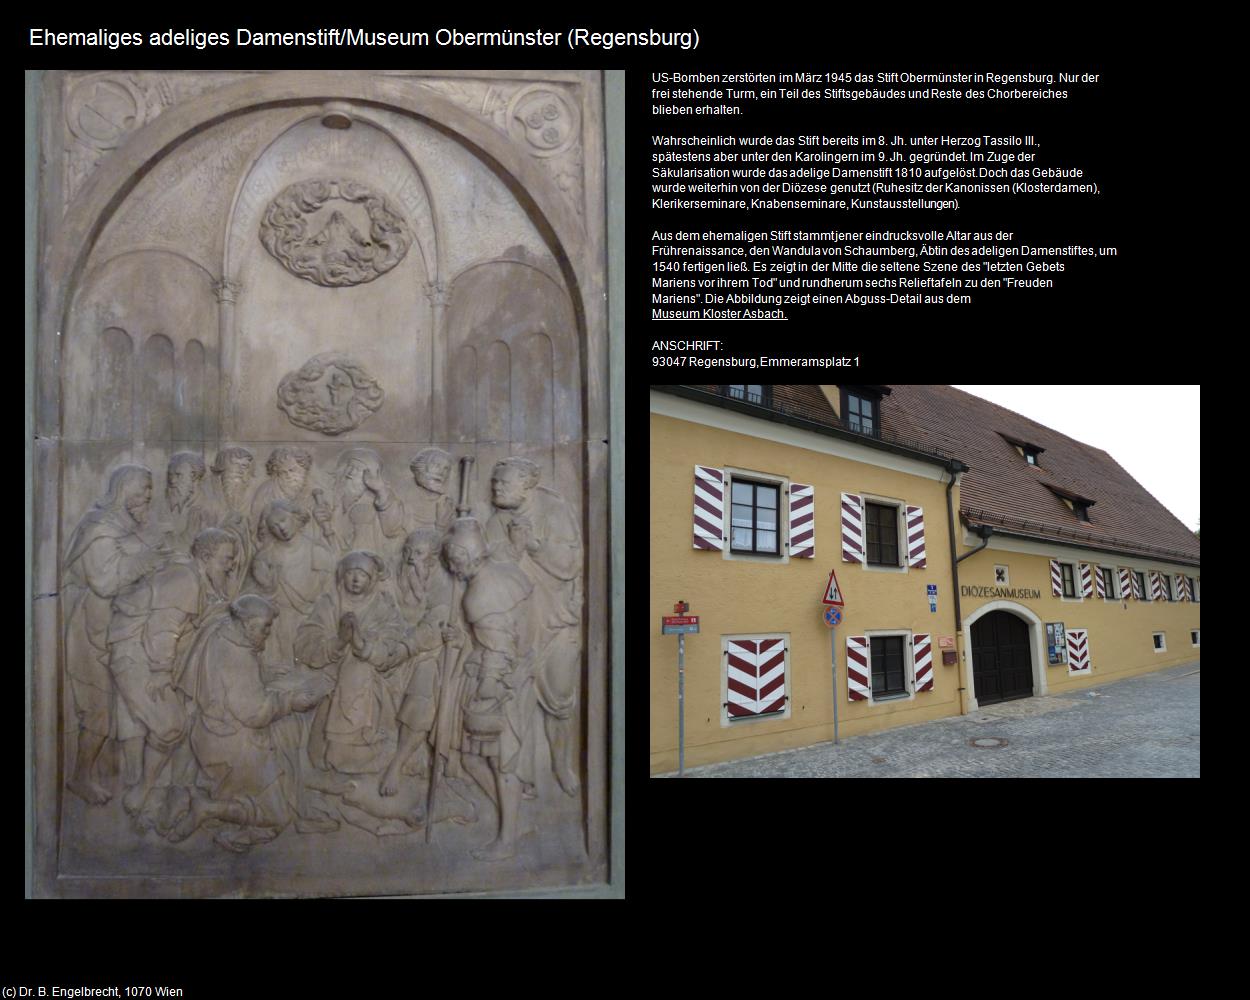 Ehem. adeliges Damenstift/Museum Obermünster  (Regensburg) in Kulturatlas-BAYERN(c)B.Engelbrecht